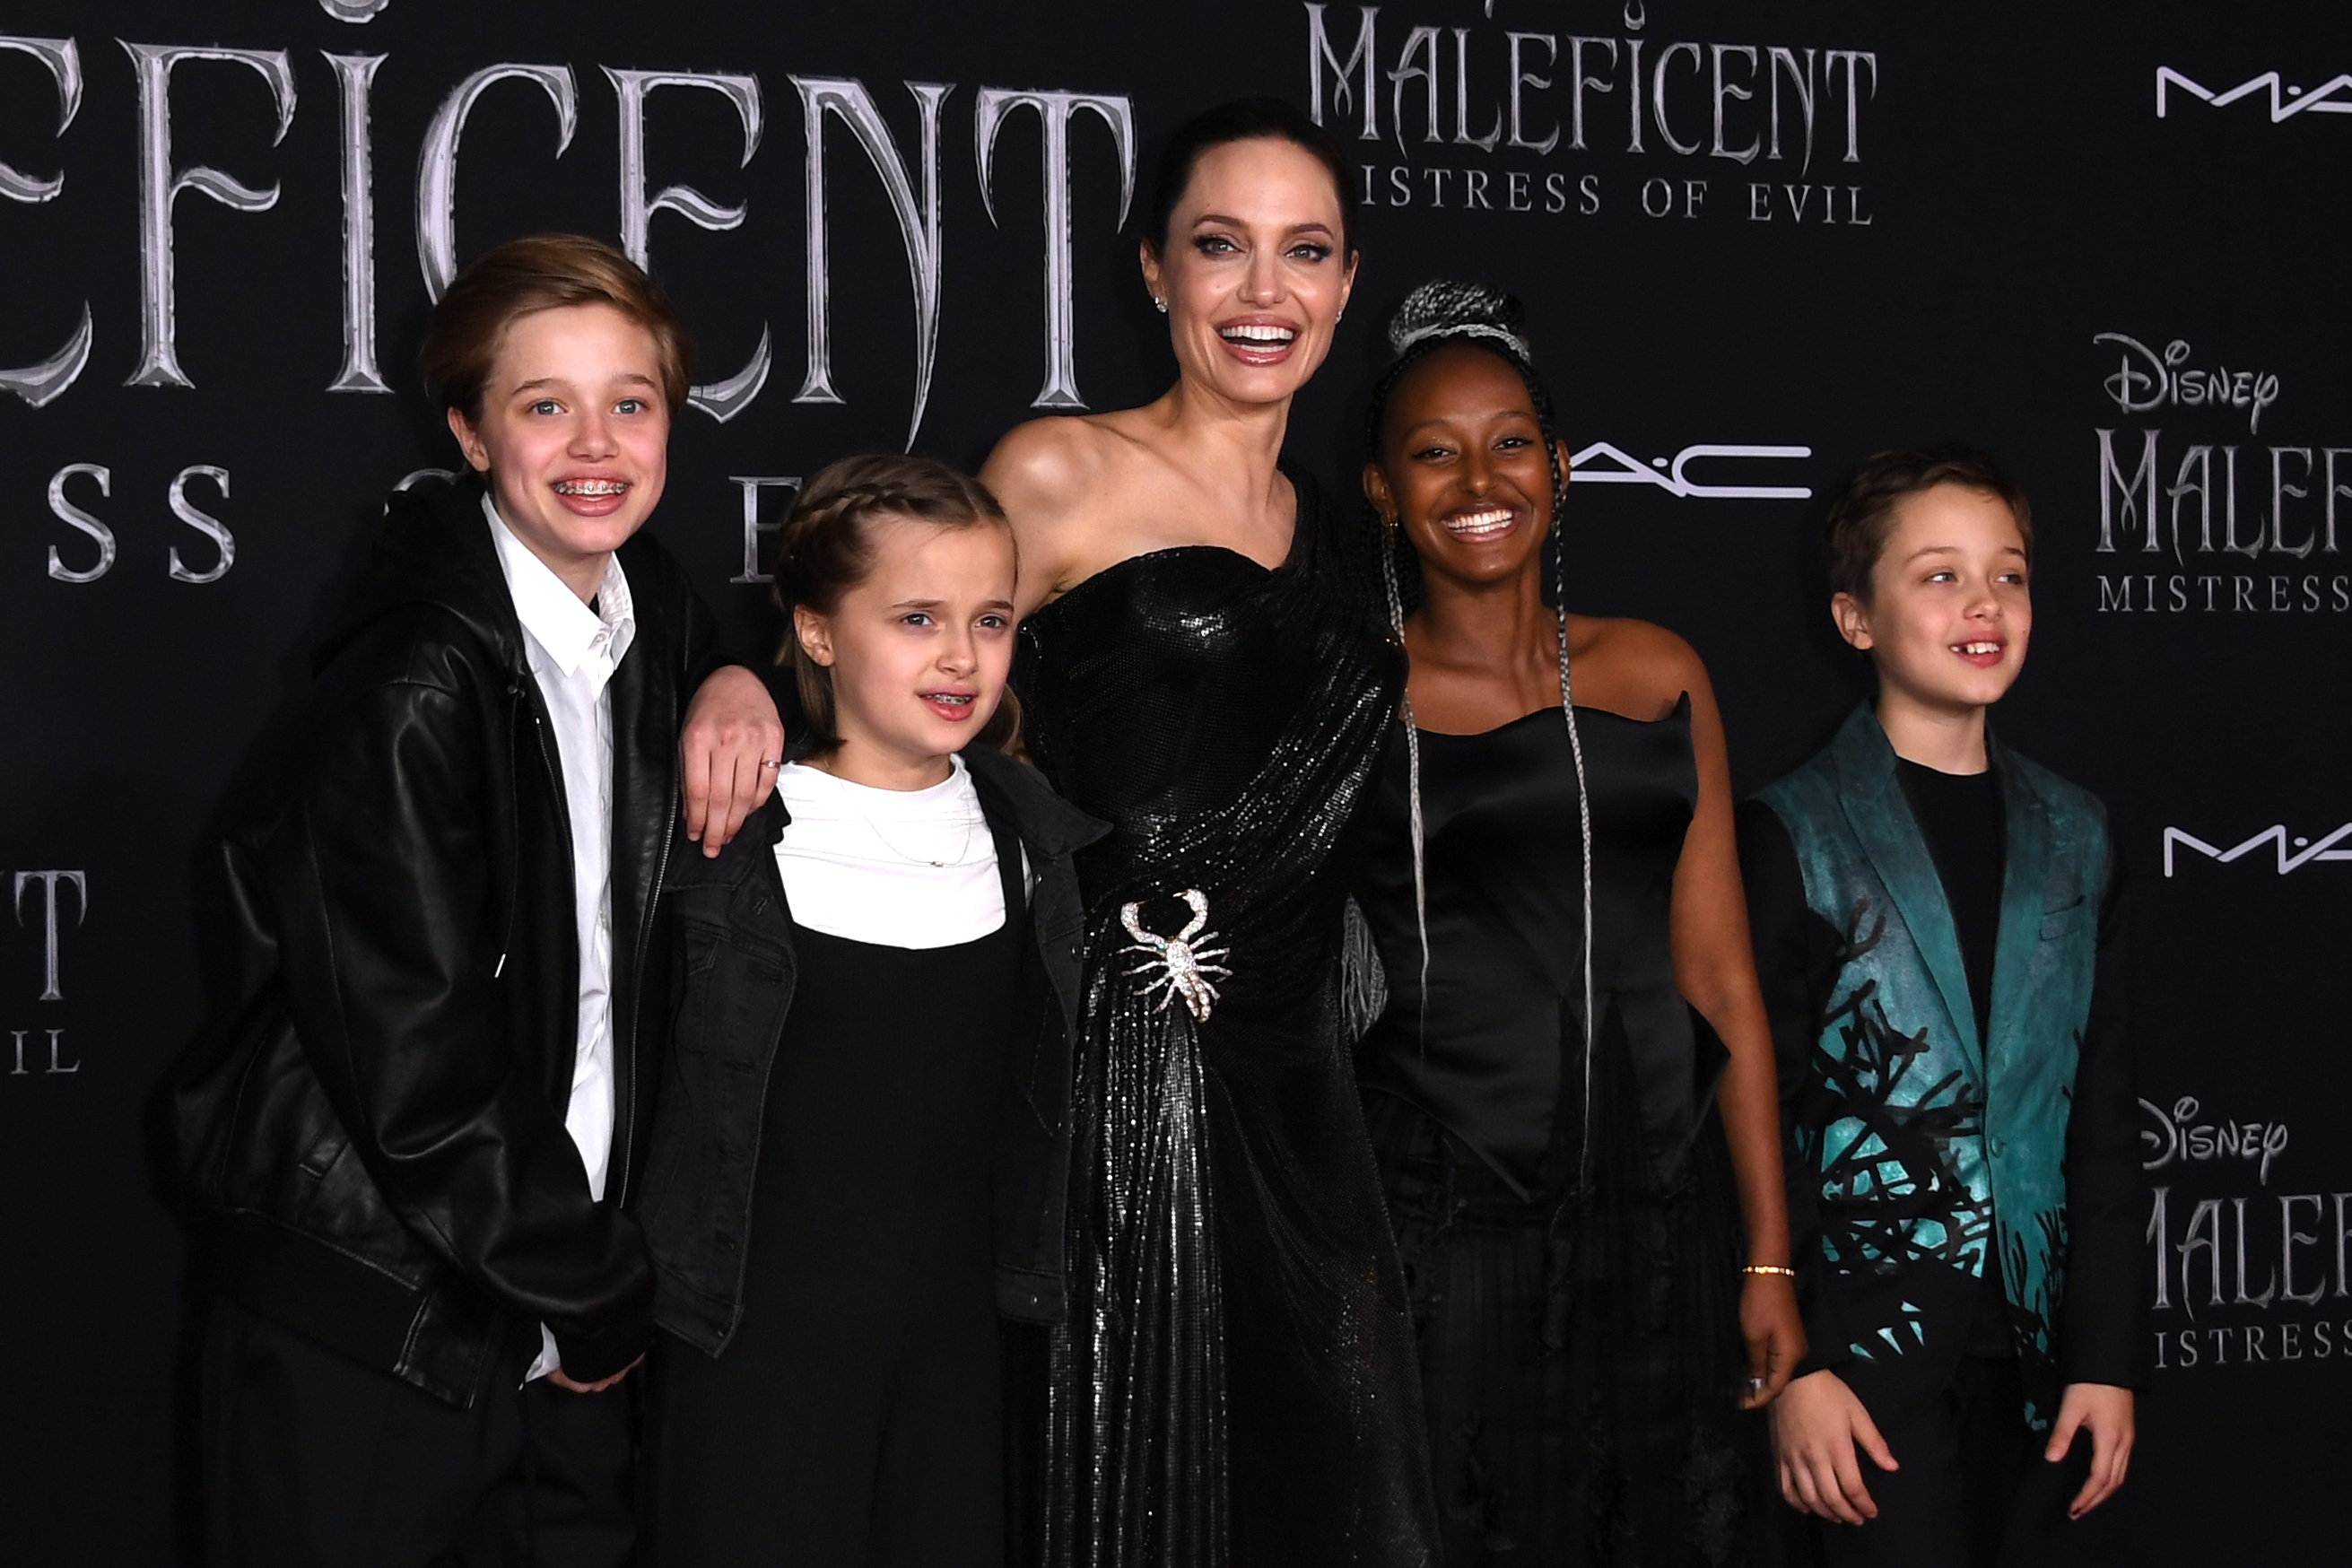 Shiloh Jolie-Pitt, Vivienne Jolie-Pitt, Zahara Jolie-Pitt y Knox Jolie-Pitt llegan al estreno mundial de la película de Disney "Maleficent: Mistress of Evil" de Disney en Hollywood el 30 de septiembre de 2019 | Foto: Getty Images